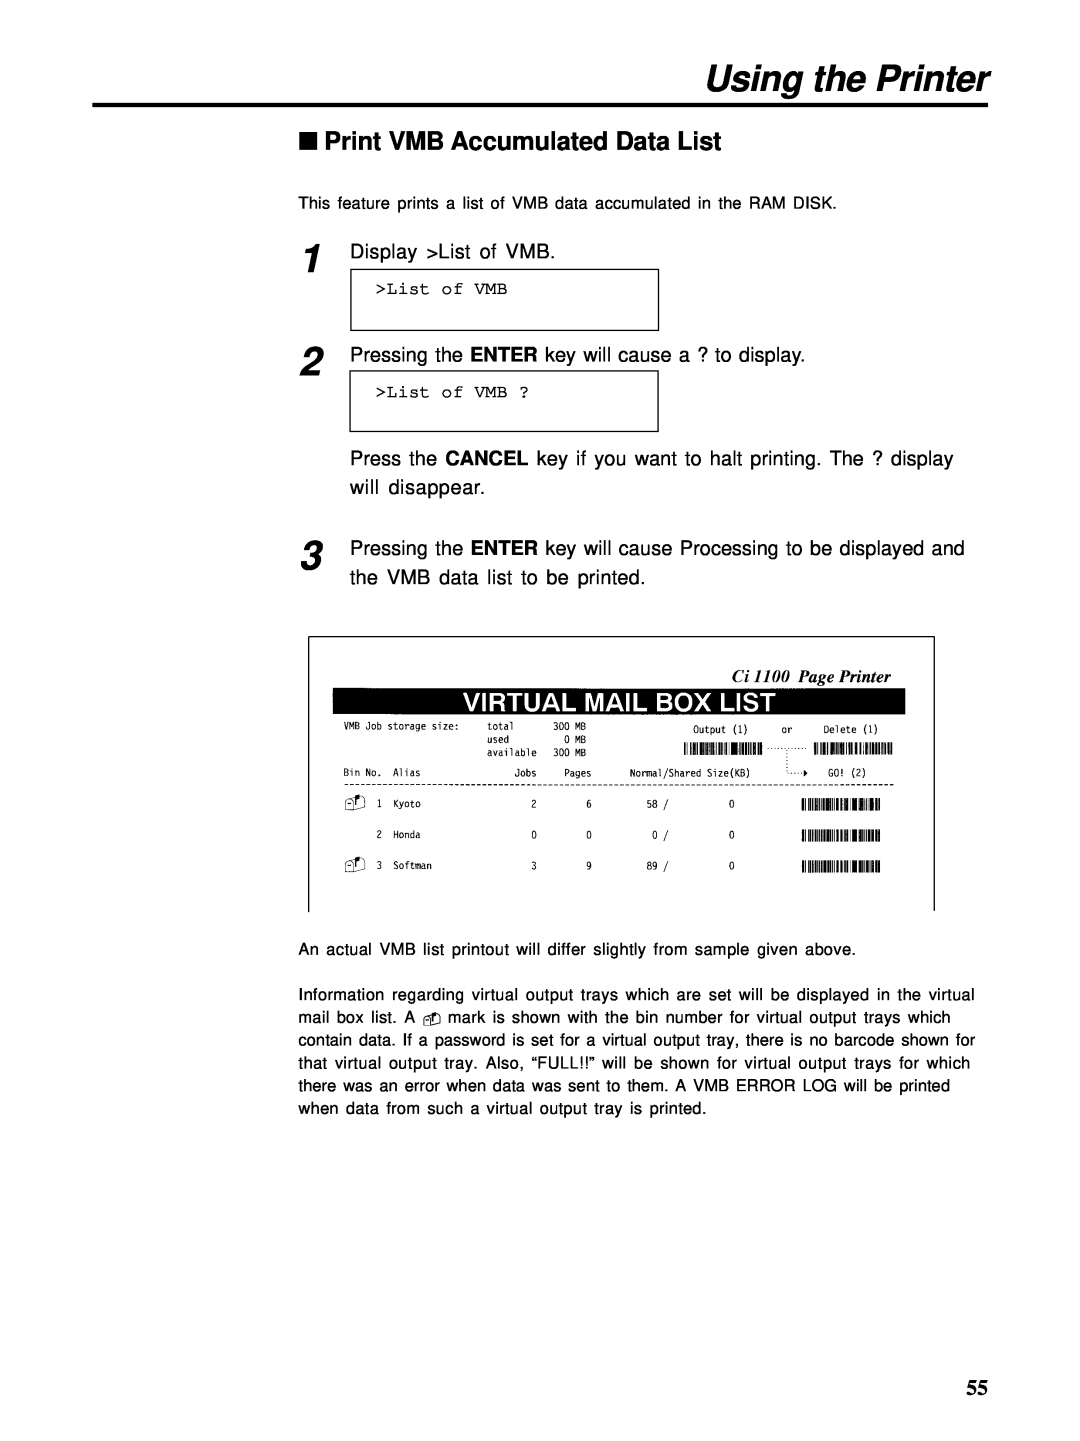 HP Ci 1100 manual Print VMB Accumulated Data List, Using the Printer, Display List of VMB 